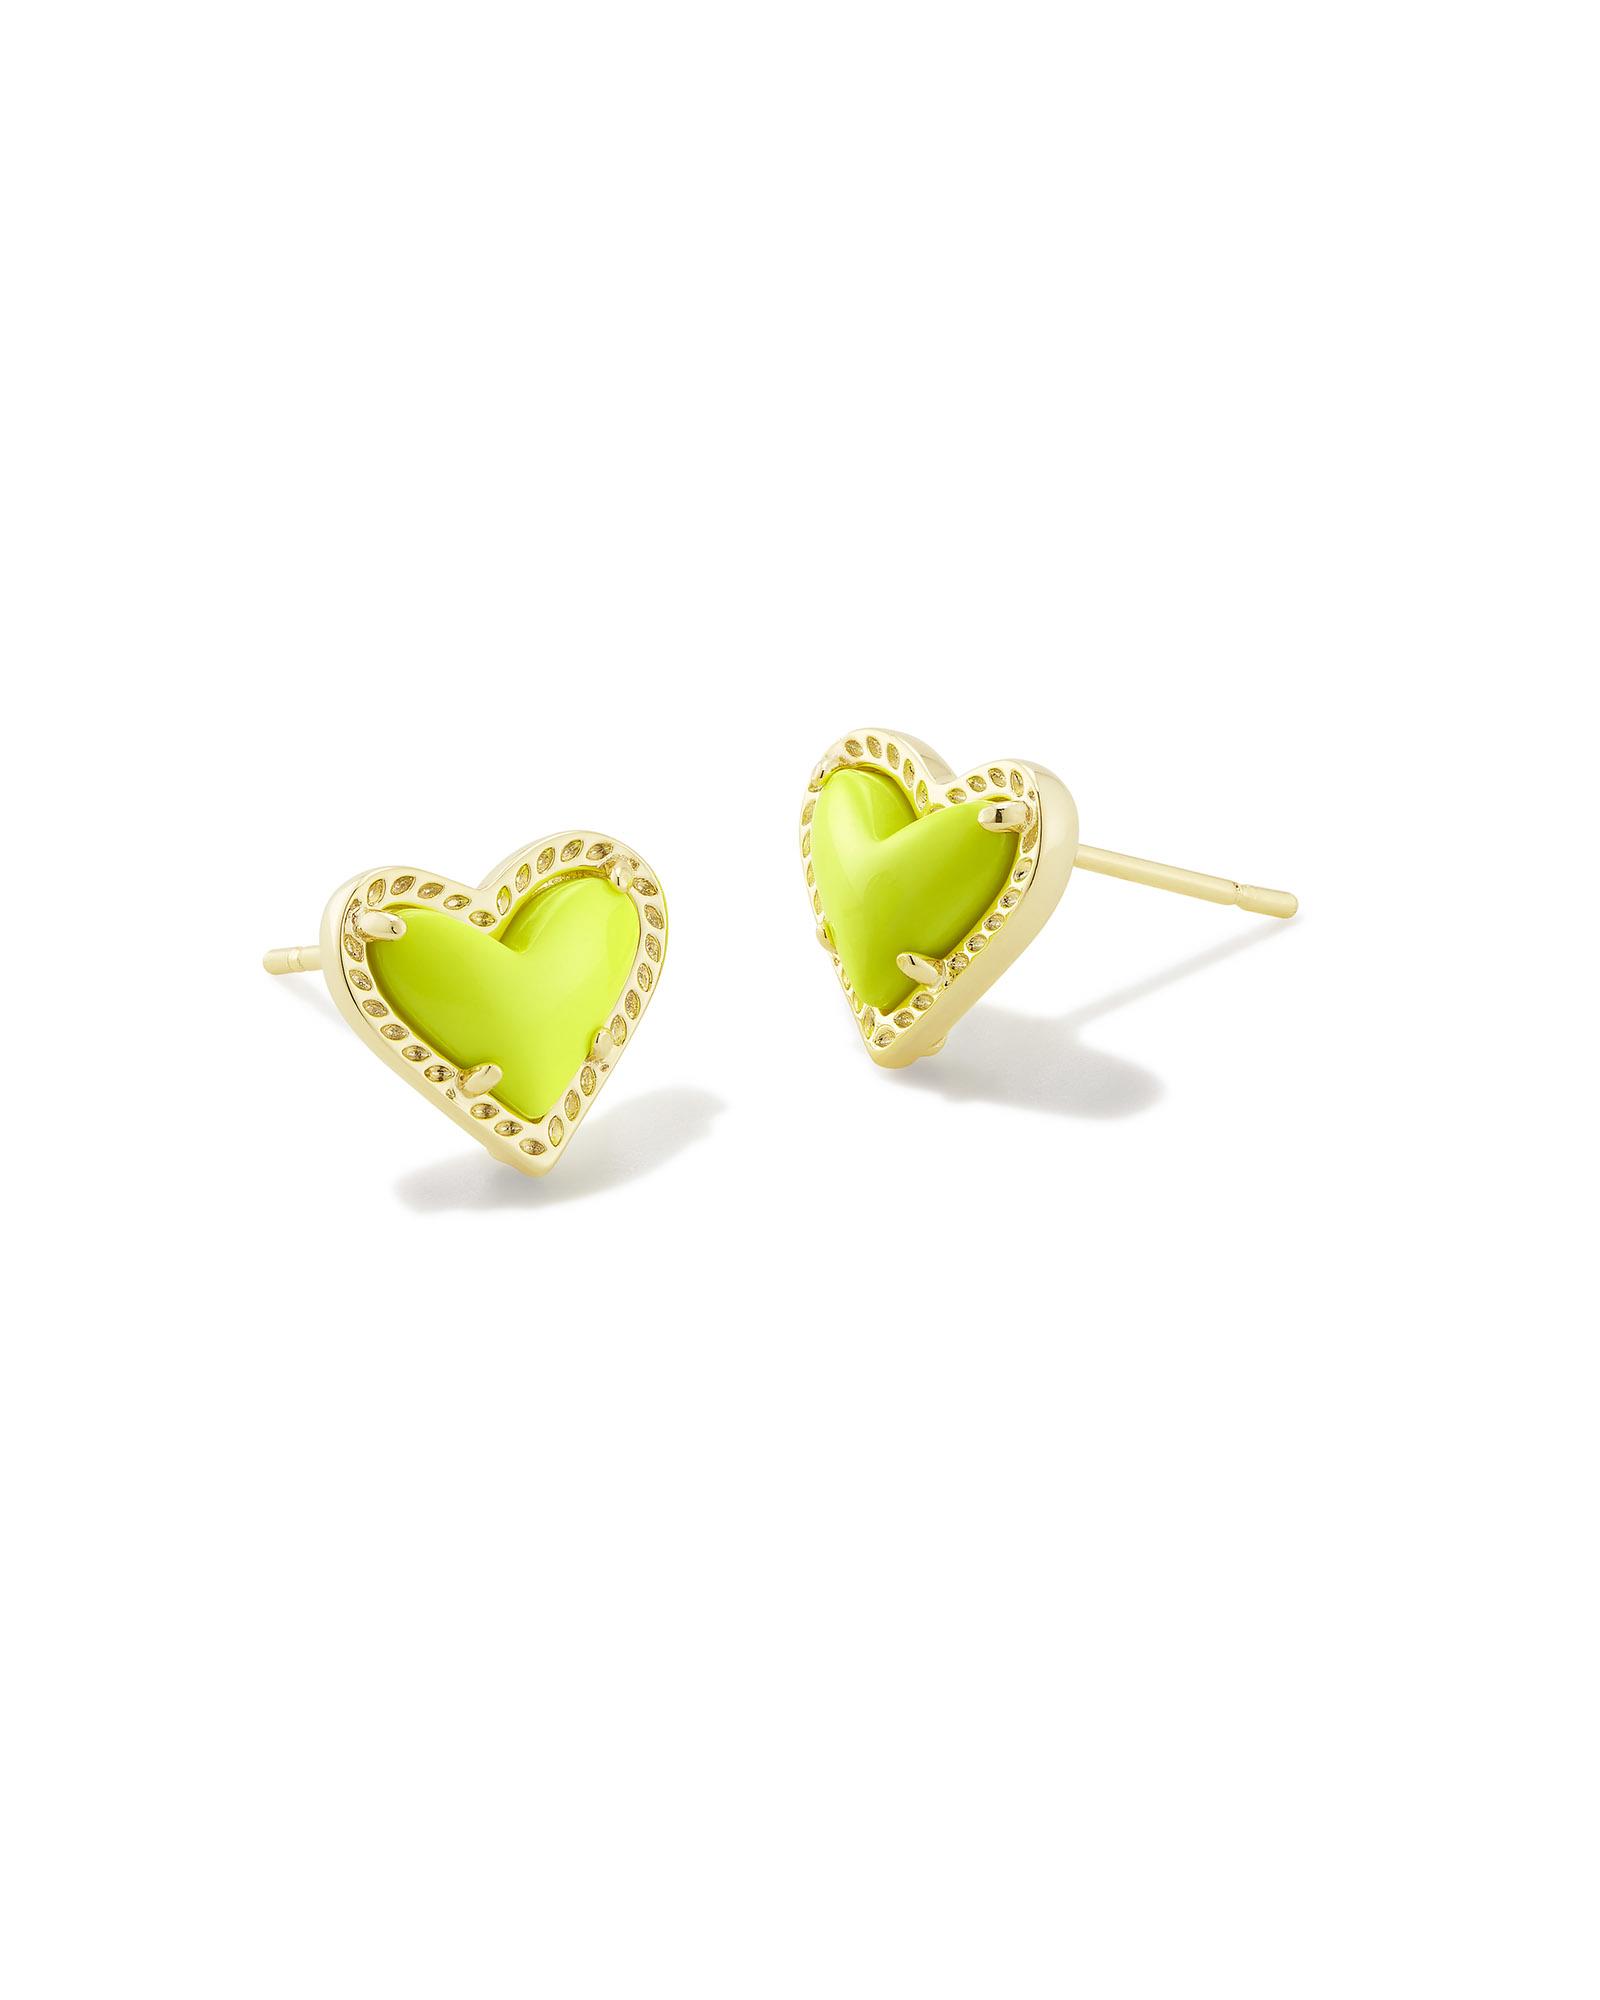 Ari Heart Gold Stud Earrings in Chartreuse Magnesite